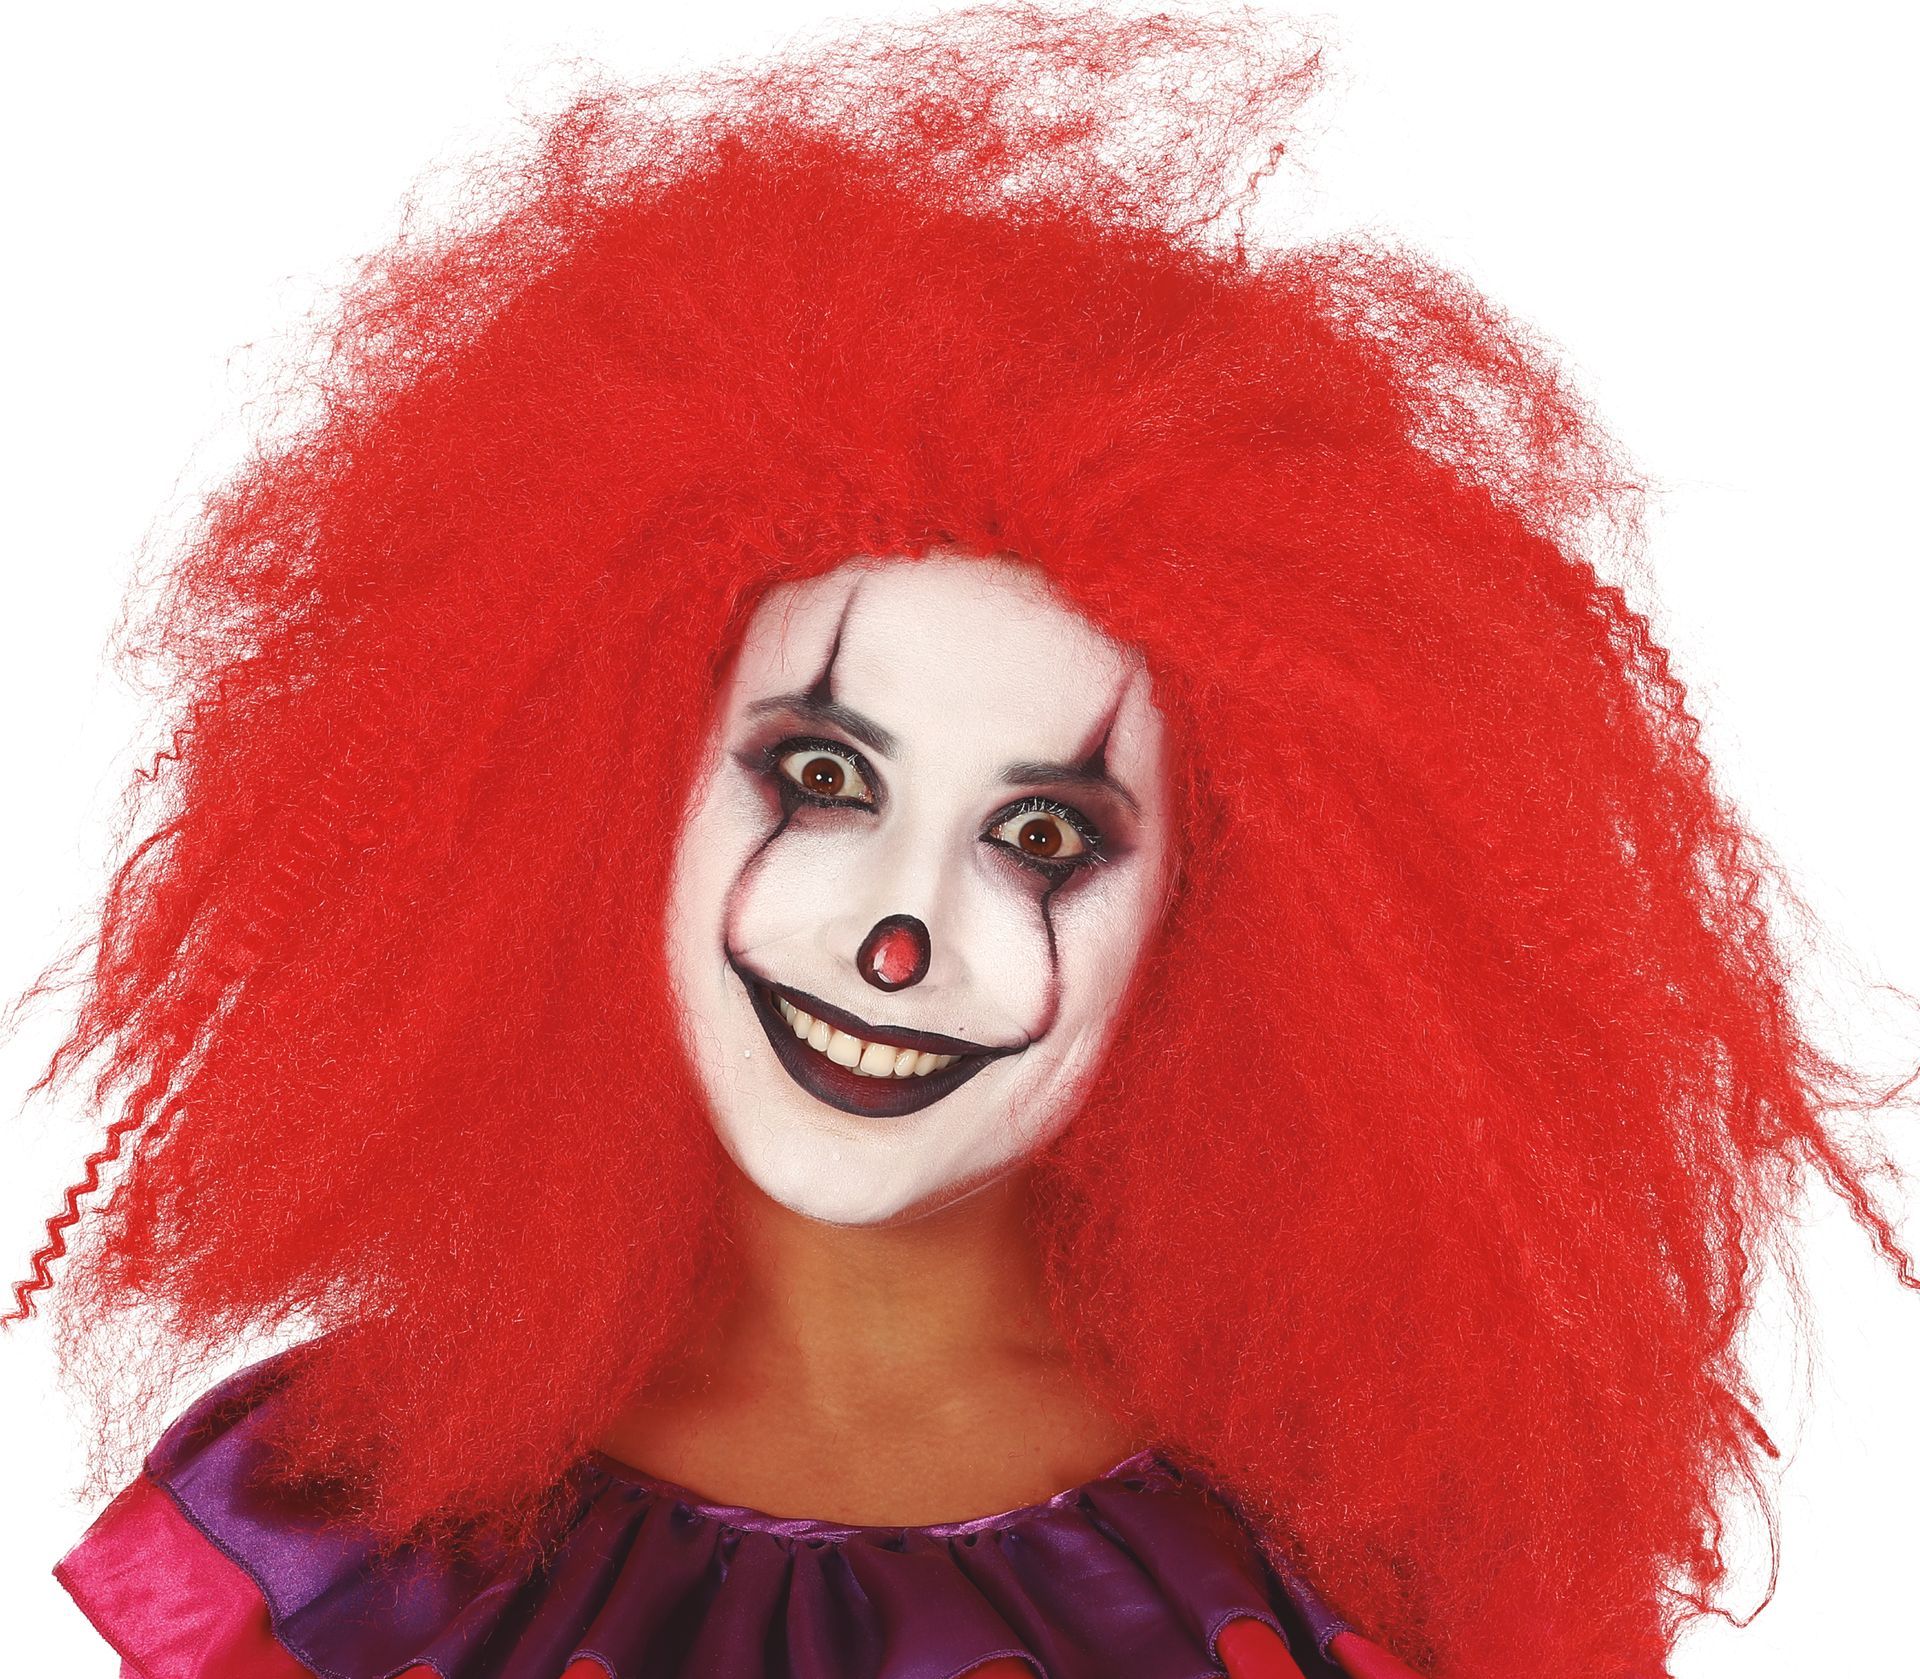 Horror clown pruik rood